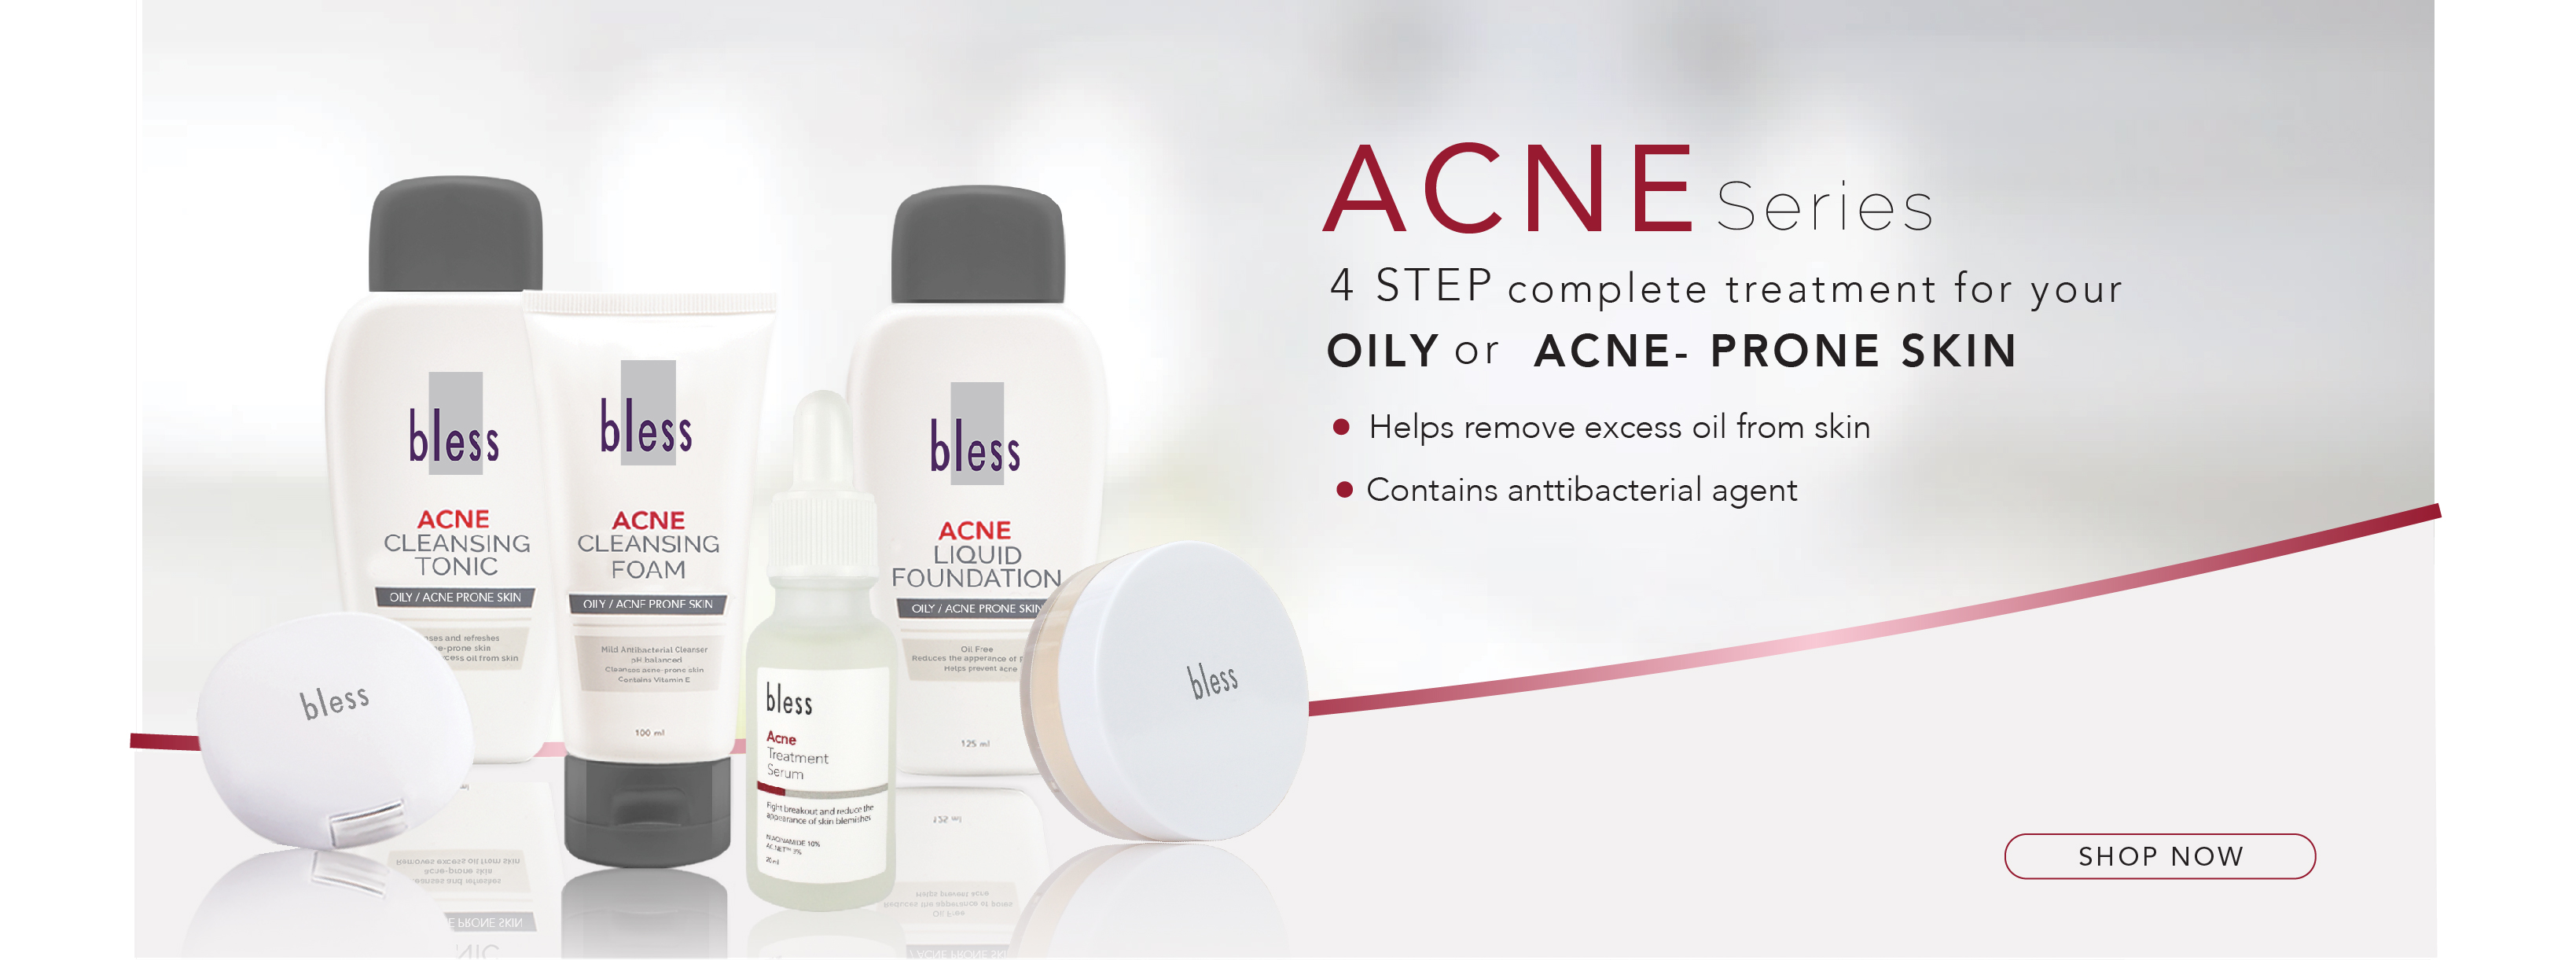 acne-trial-1-08